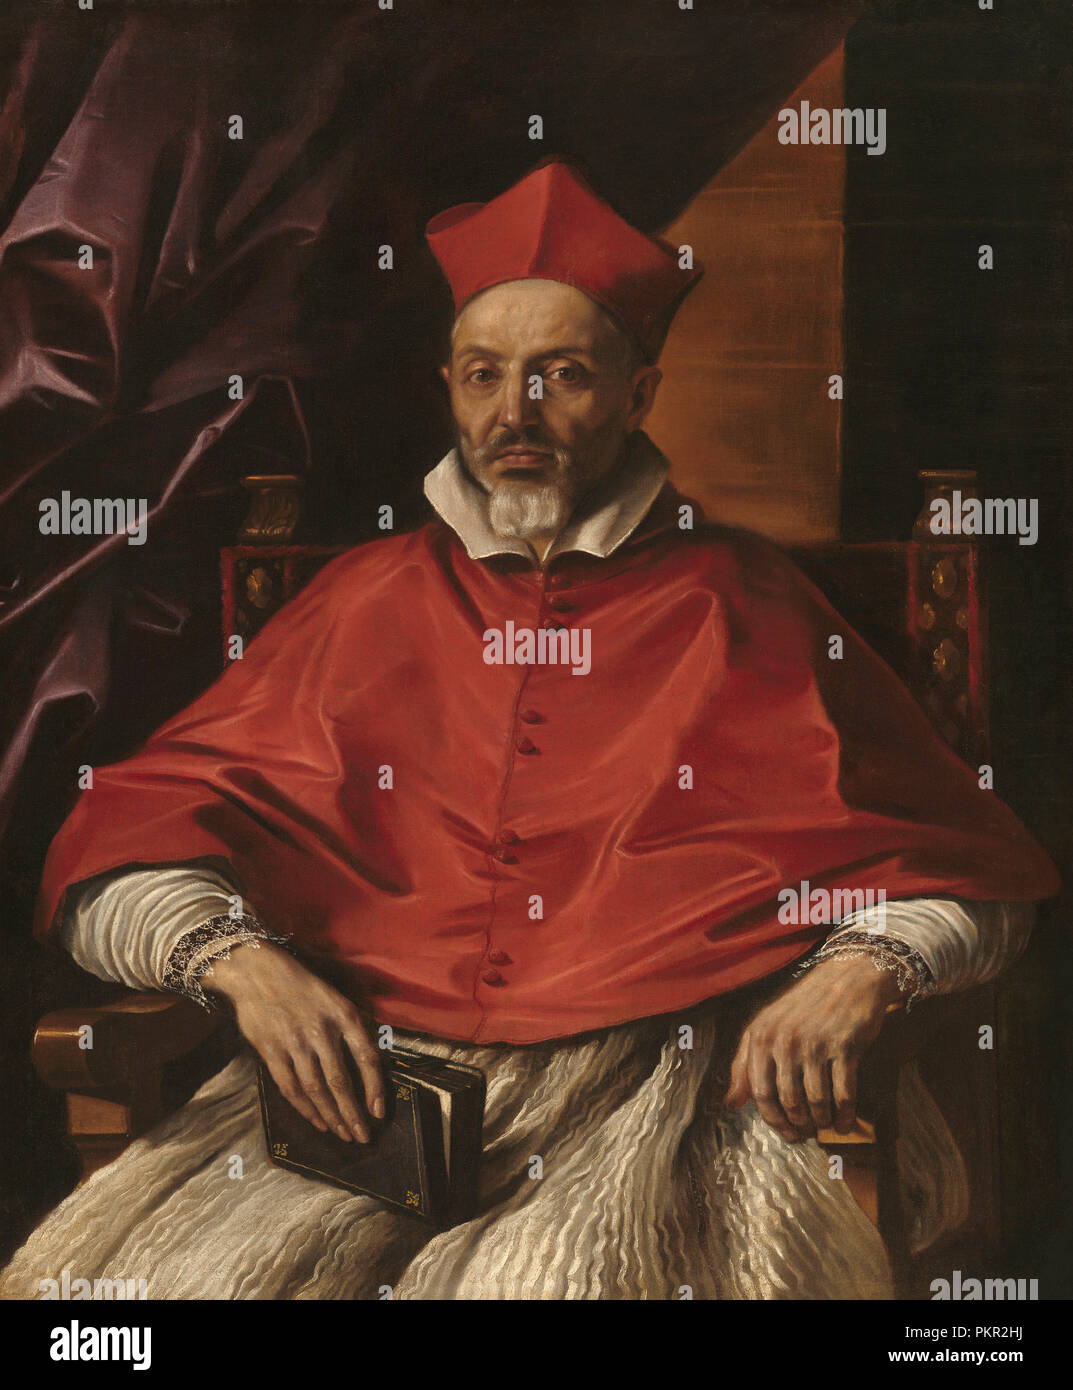 Cardinal Francesco Cennini. Dated: 1625. Dimensions: overall: 117.4 x 96.2 cm (46 1/4 x 37 7/8 in.)  framed: 147.6 x 126.7 x 6.9 cm (58 1/8 x 49 7/8 x 2 11/16 in.). Medium: oil on canvas. Museum: National Gallery of Art, Washington DC. Author: Giovanni Francesco Barbieri, called Guercino. Stock Photo